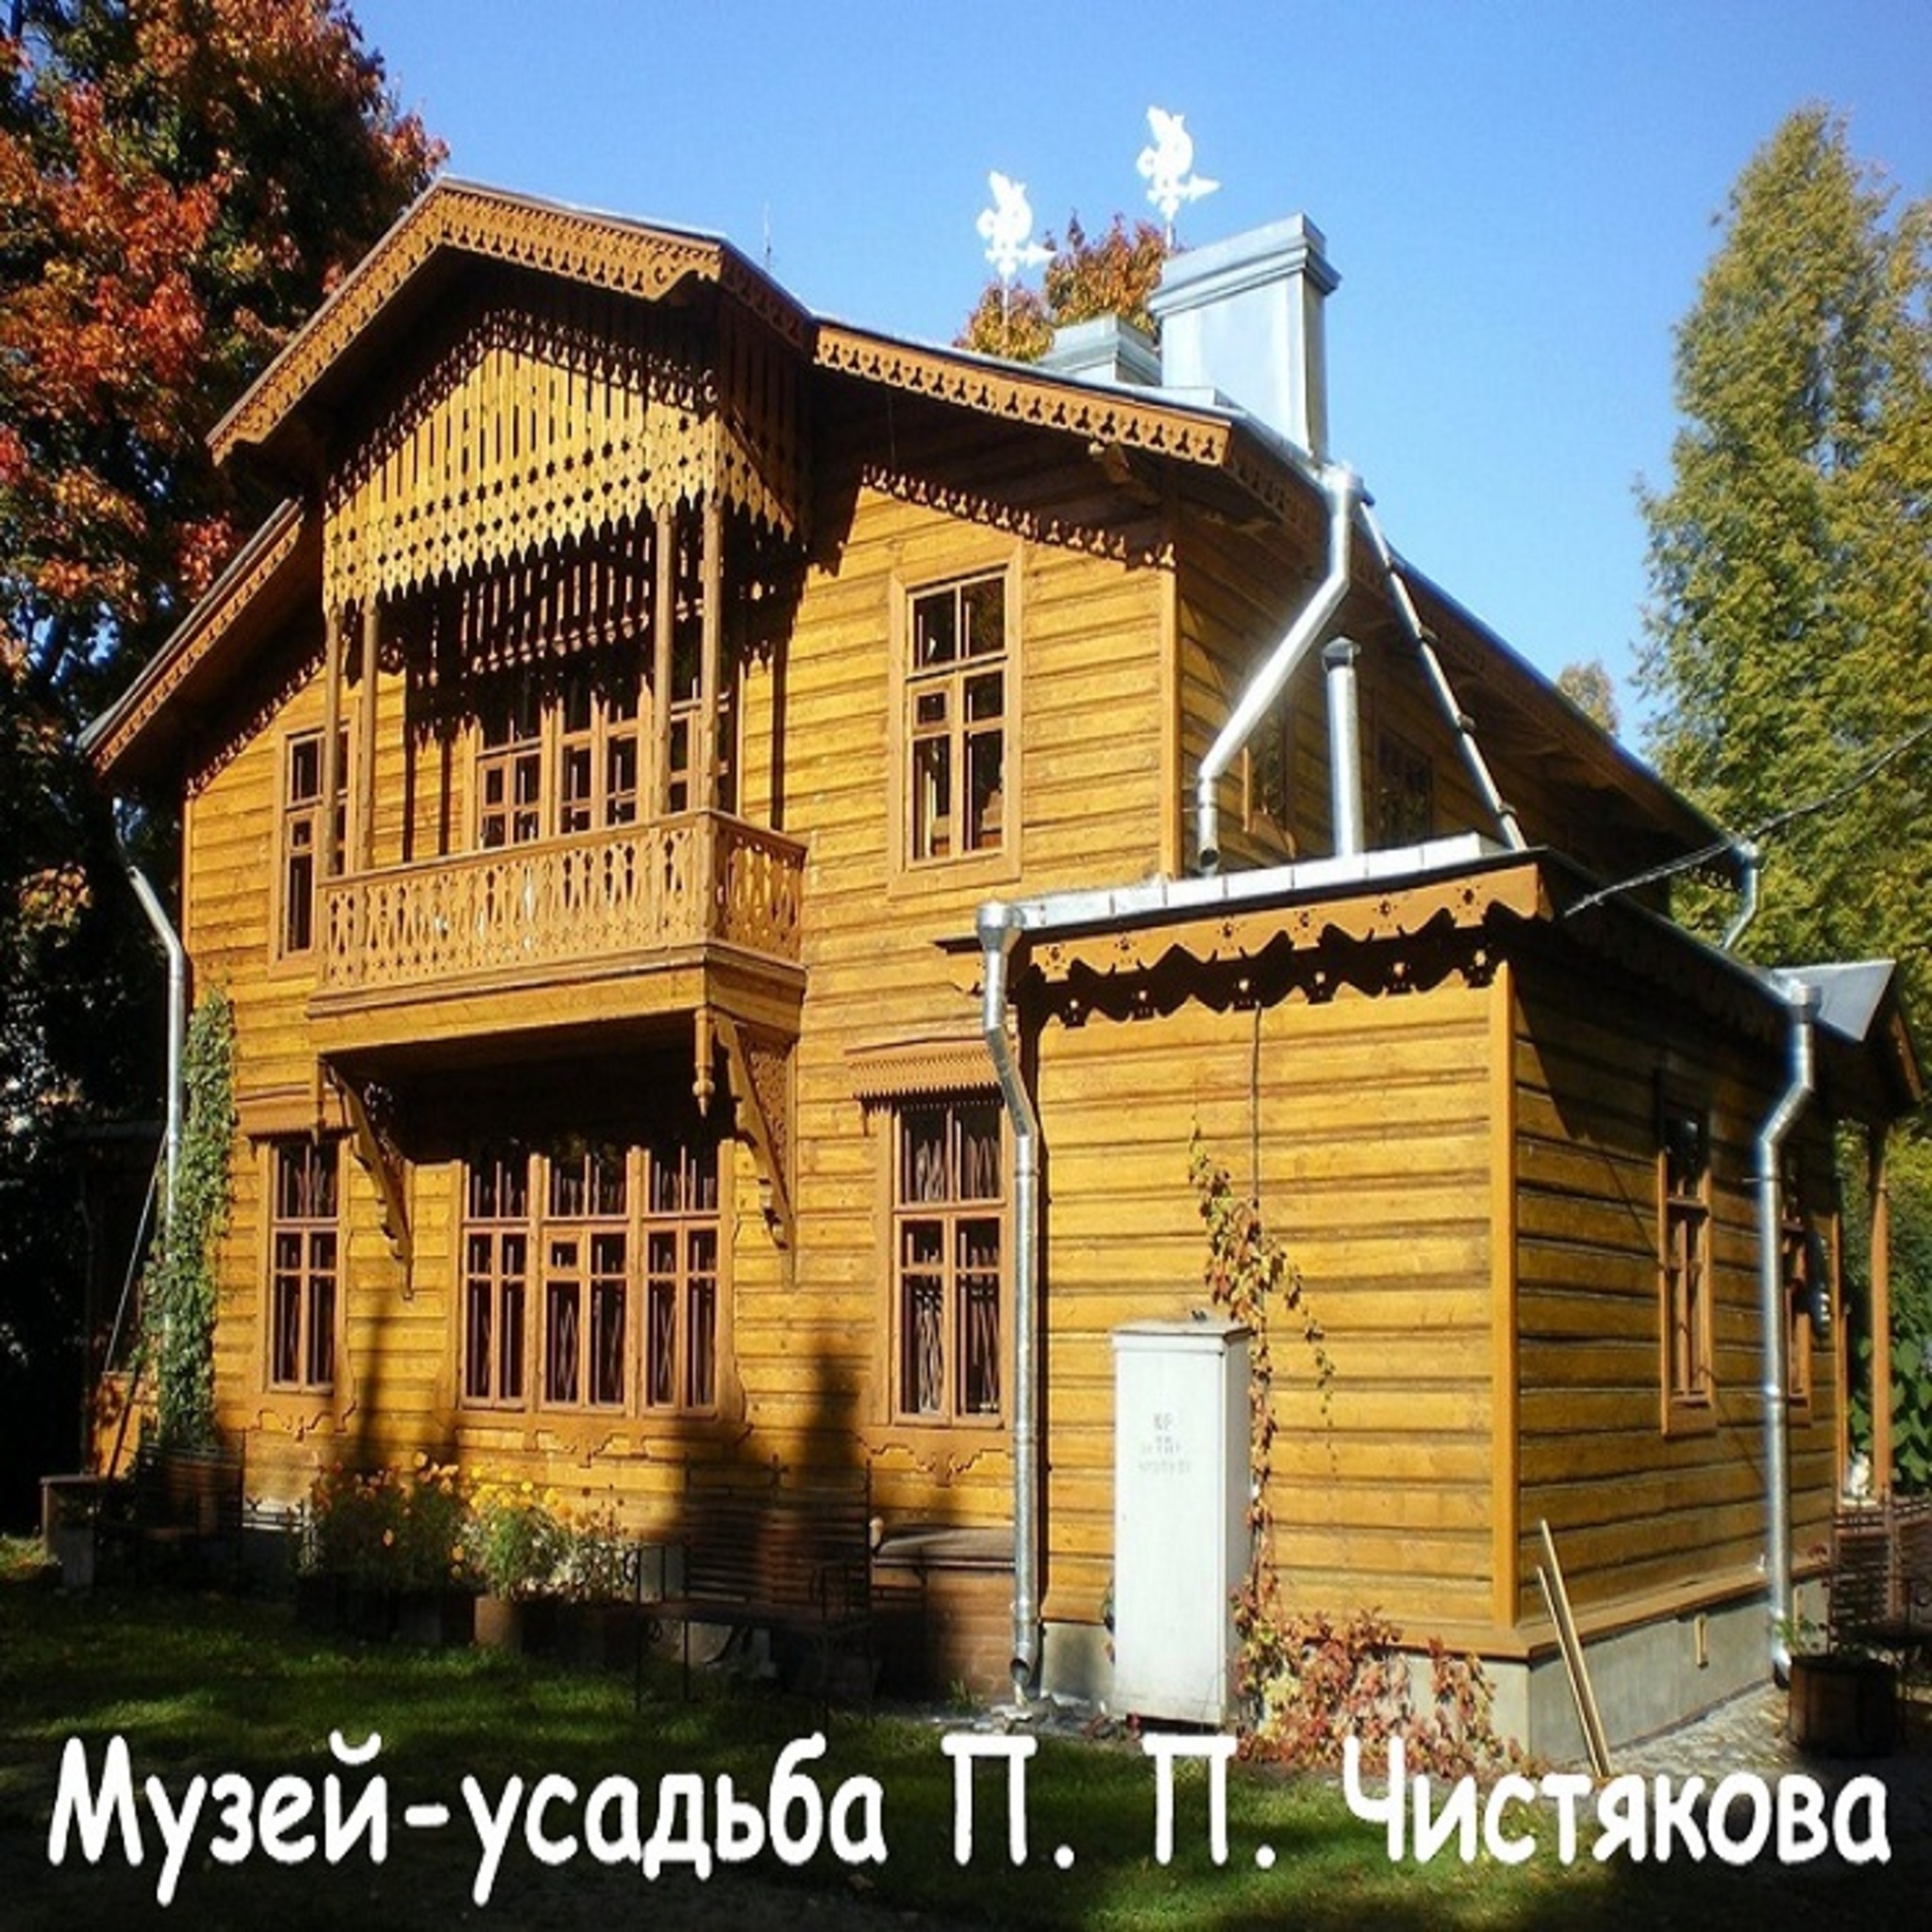 Museum-estate of Р. Р. Chistyakov